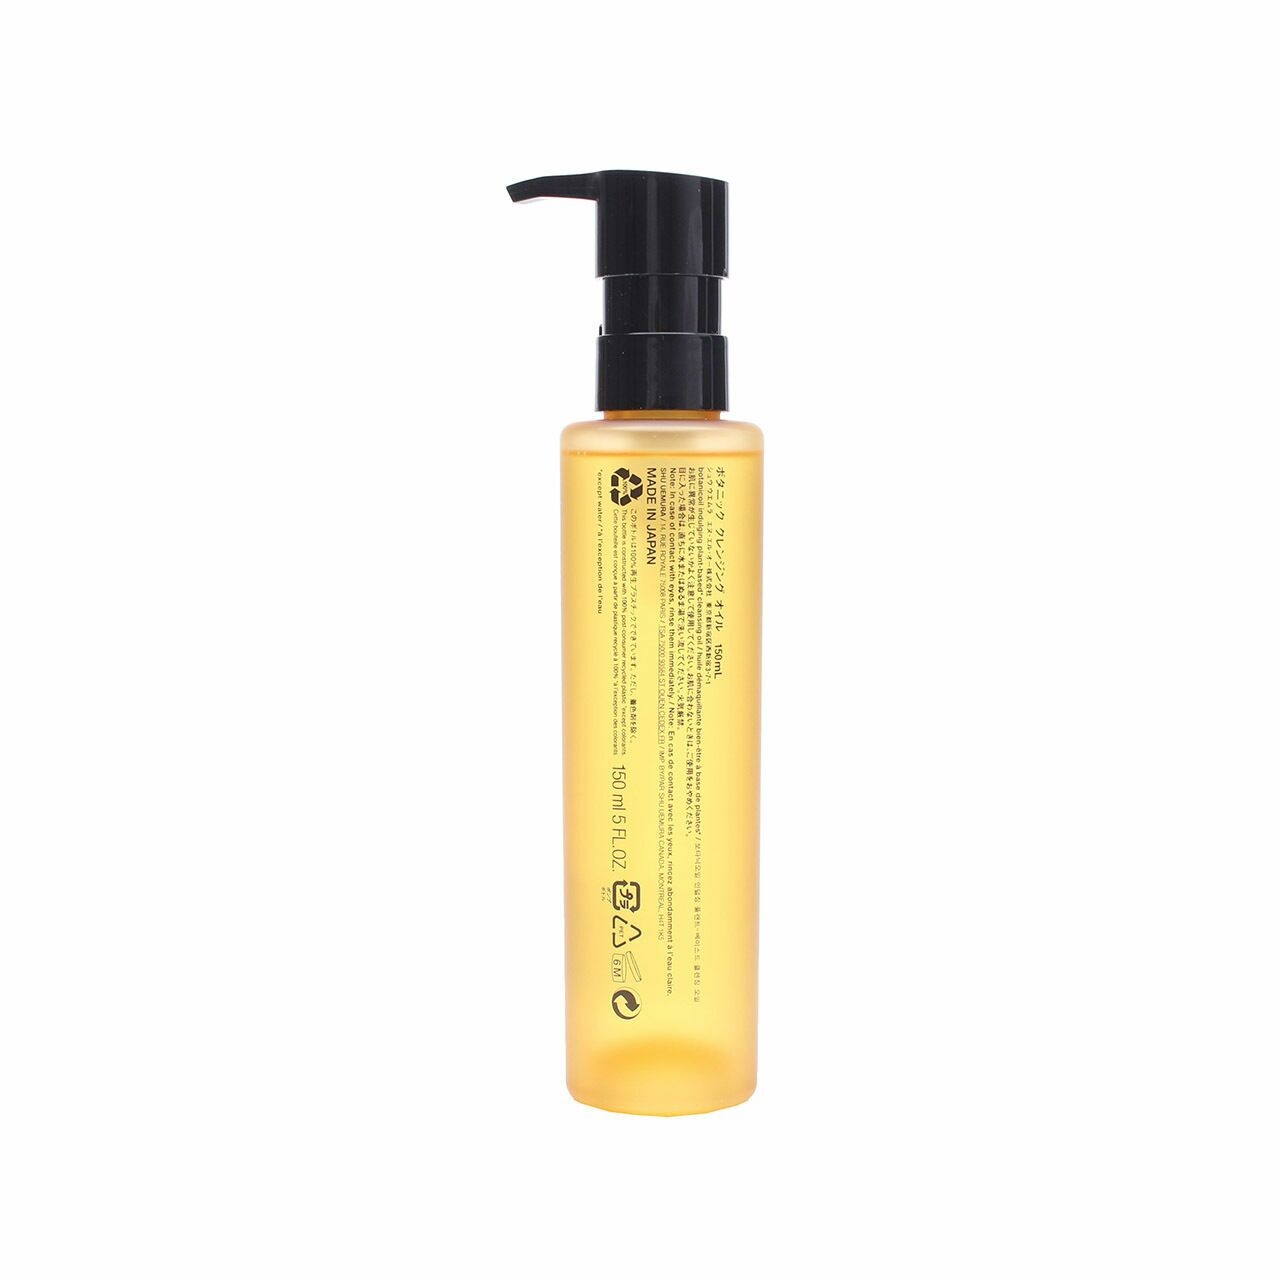 Shu Uemura Skin Purifier Botanic Oil Cleansing Oil Skin Care